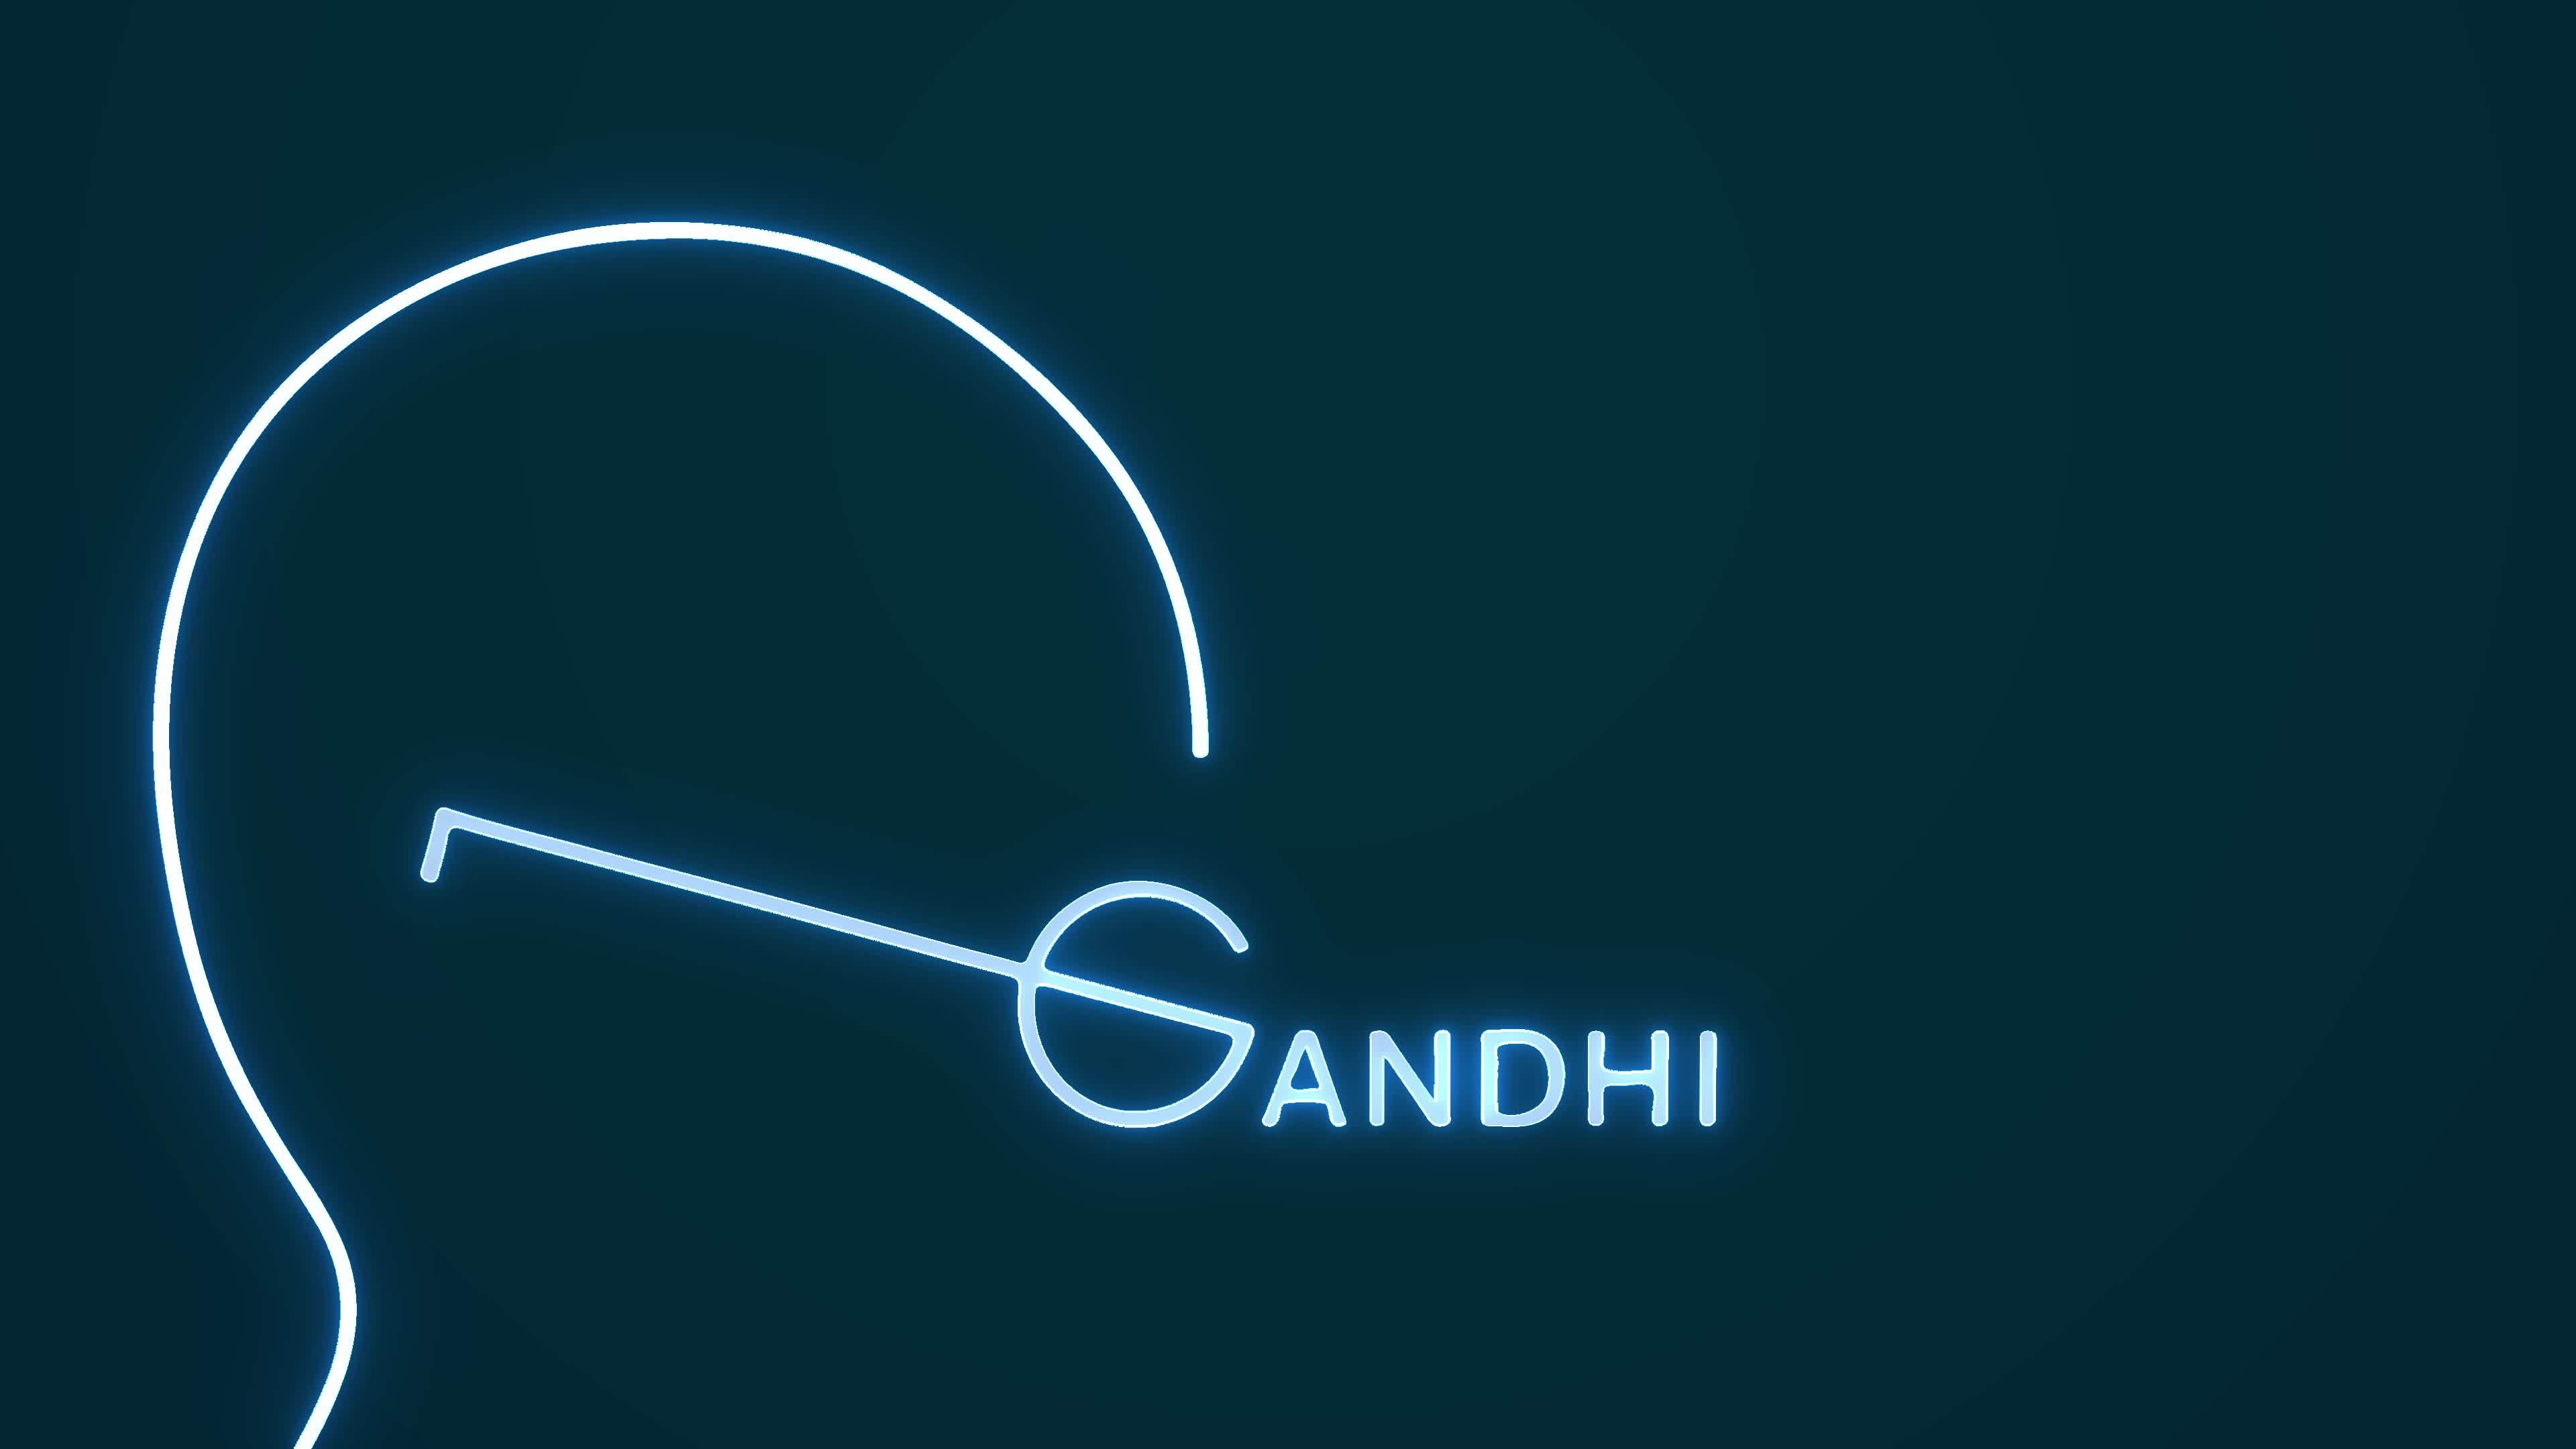 Gandhi Jayanti, 2nd October, Concept animation, Mahatma Gandhi sketch, 3840x2160 4K Desktop